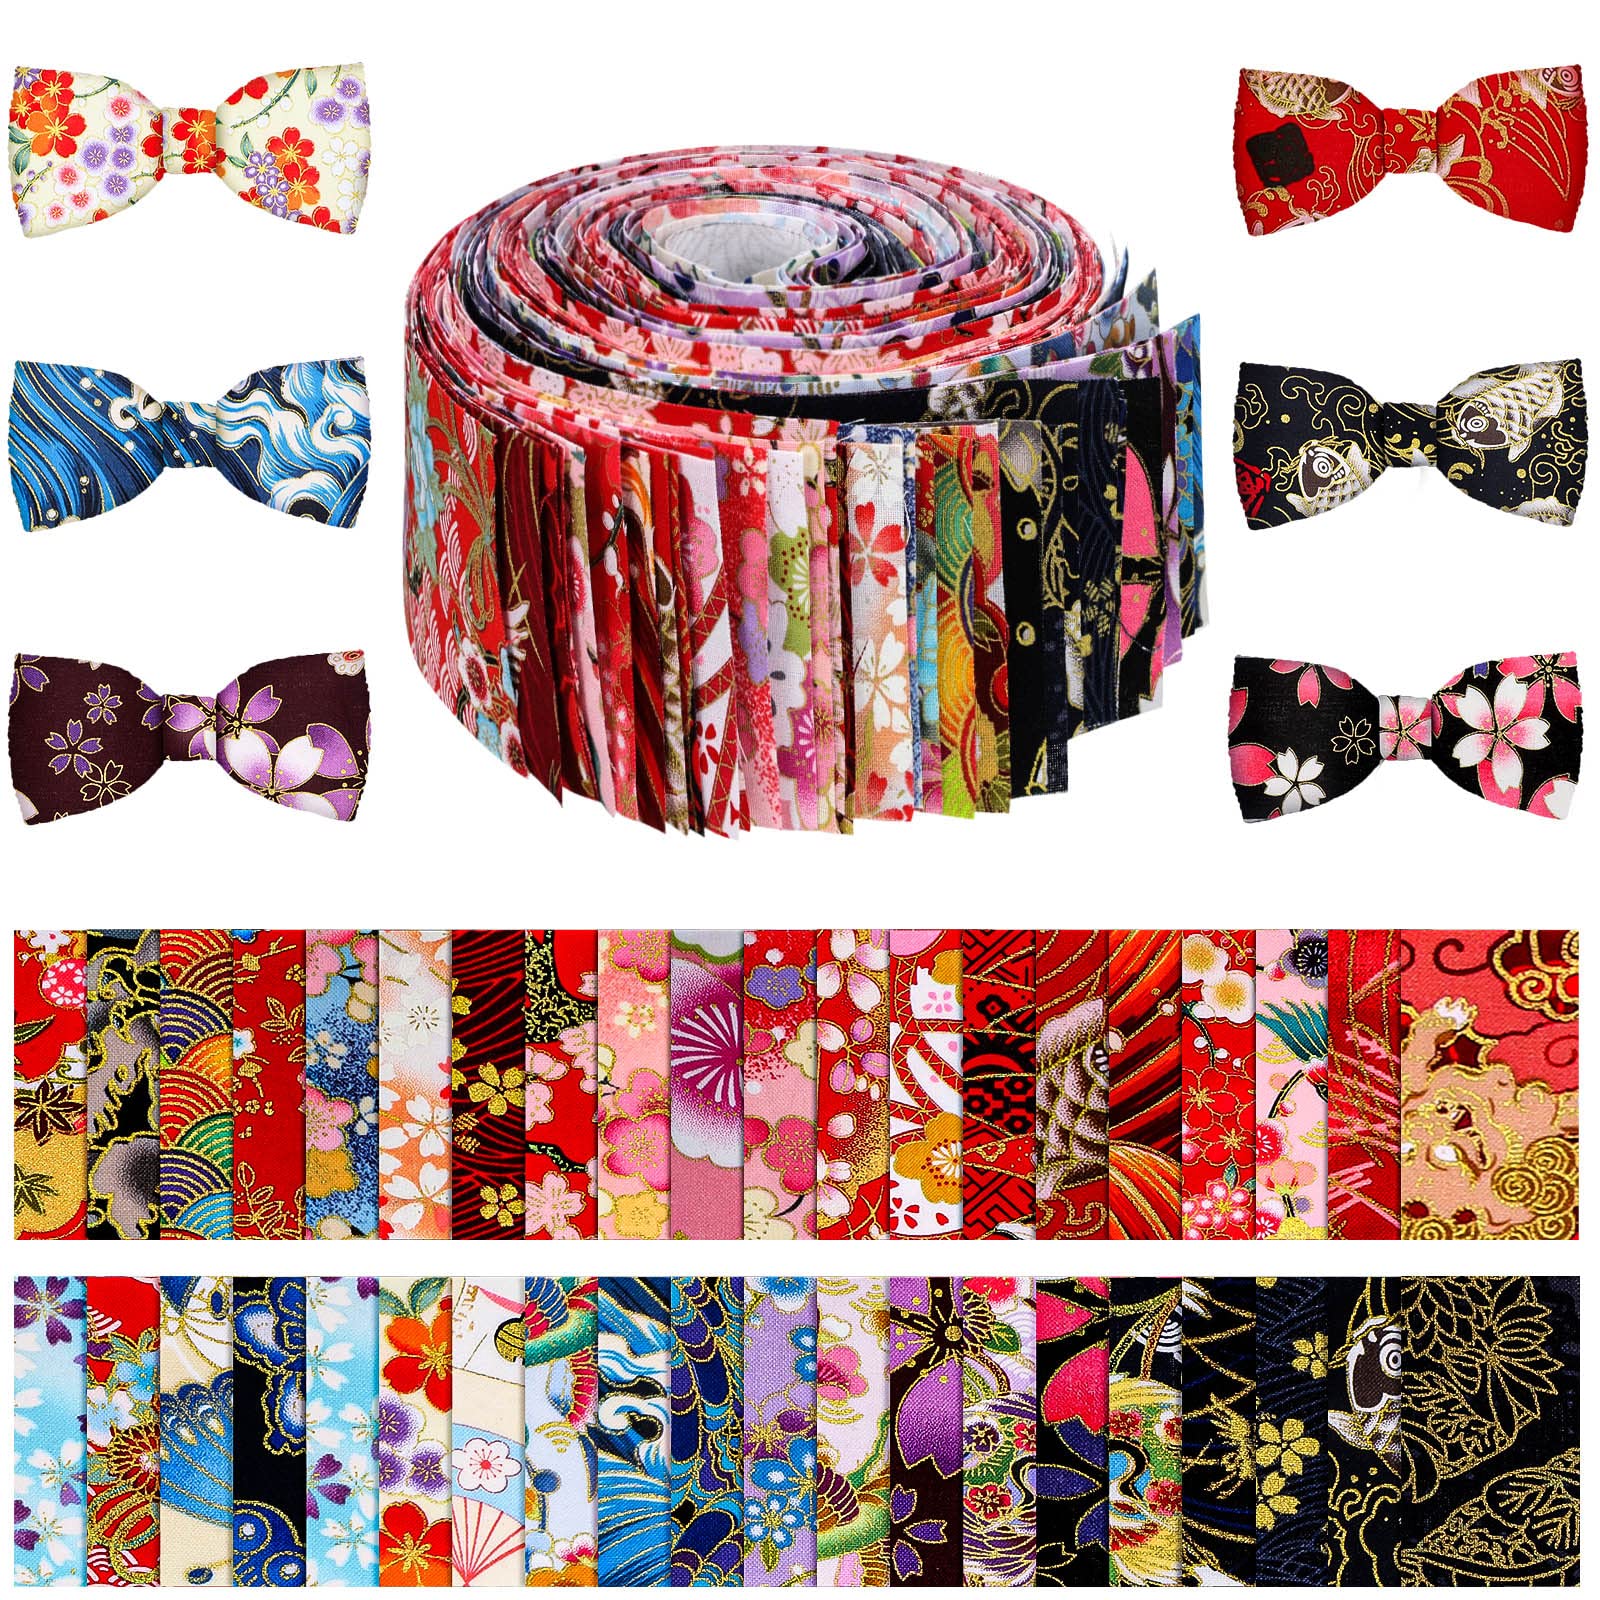 Booksew Ankara Fabric Cotton Fabric Floral Jelly Roll Strips 8-9 Pcs/lot  5x100cm Telas Patchwork Algodon Diy Dolls Sewing Craft - Fabric - AliExpress